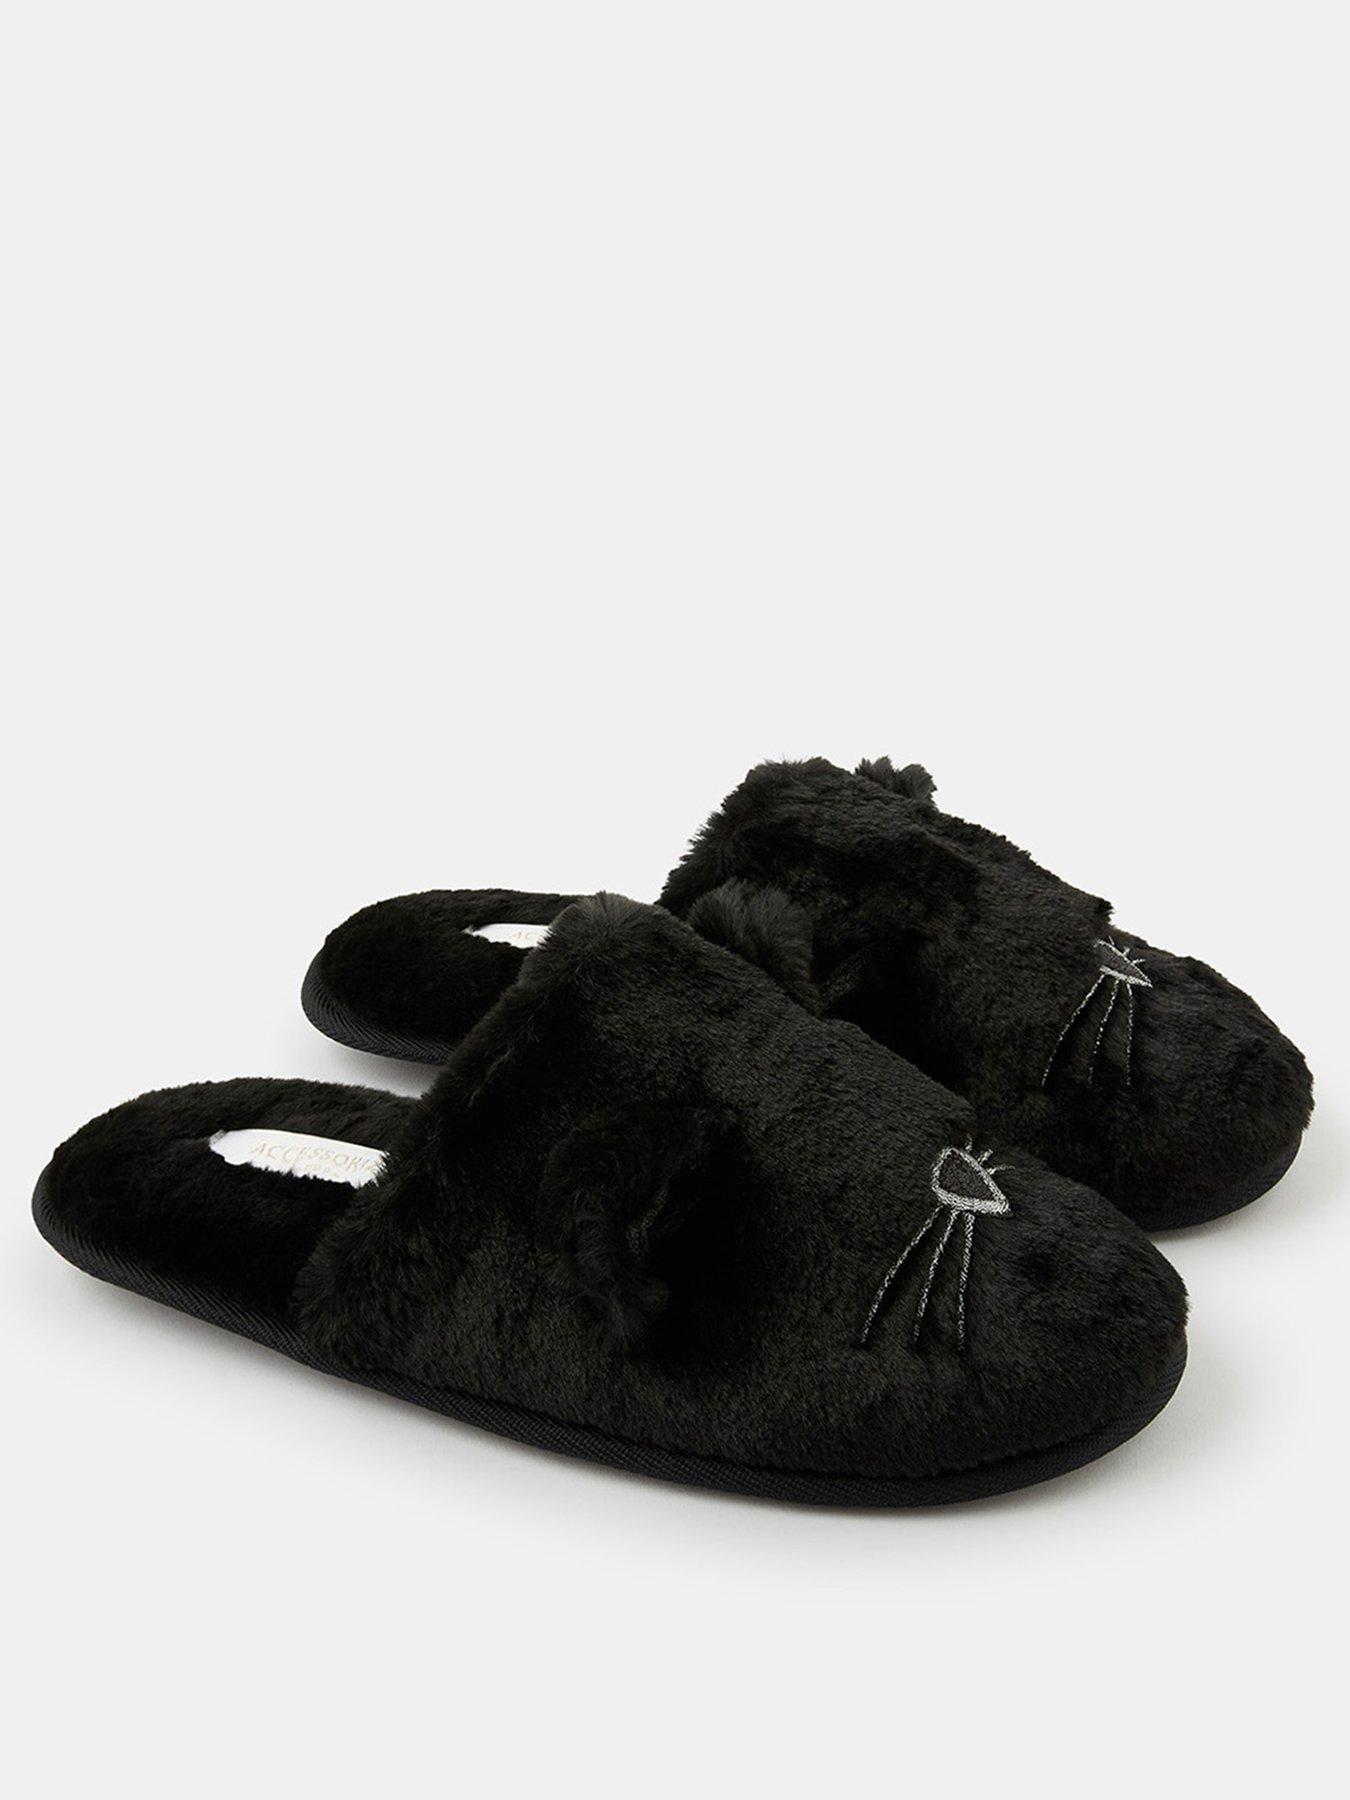 accessorize slippers